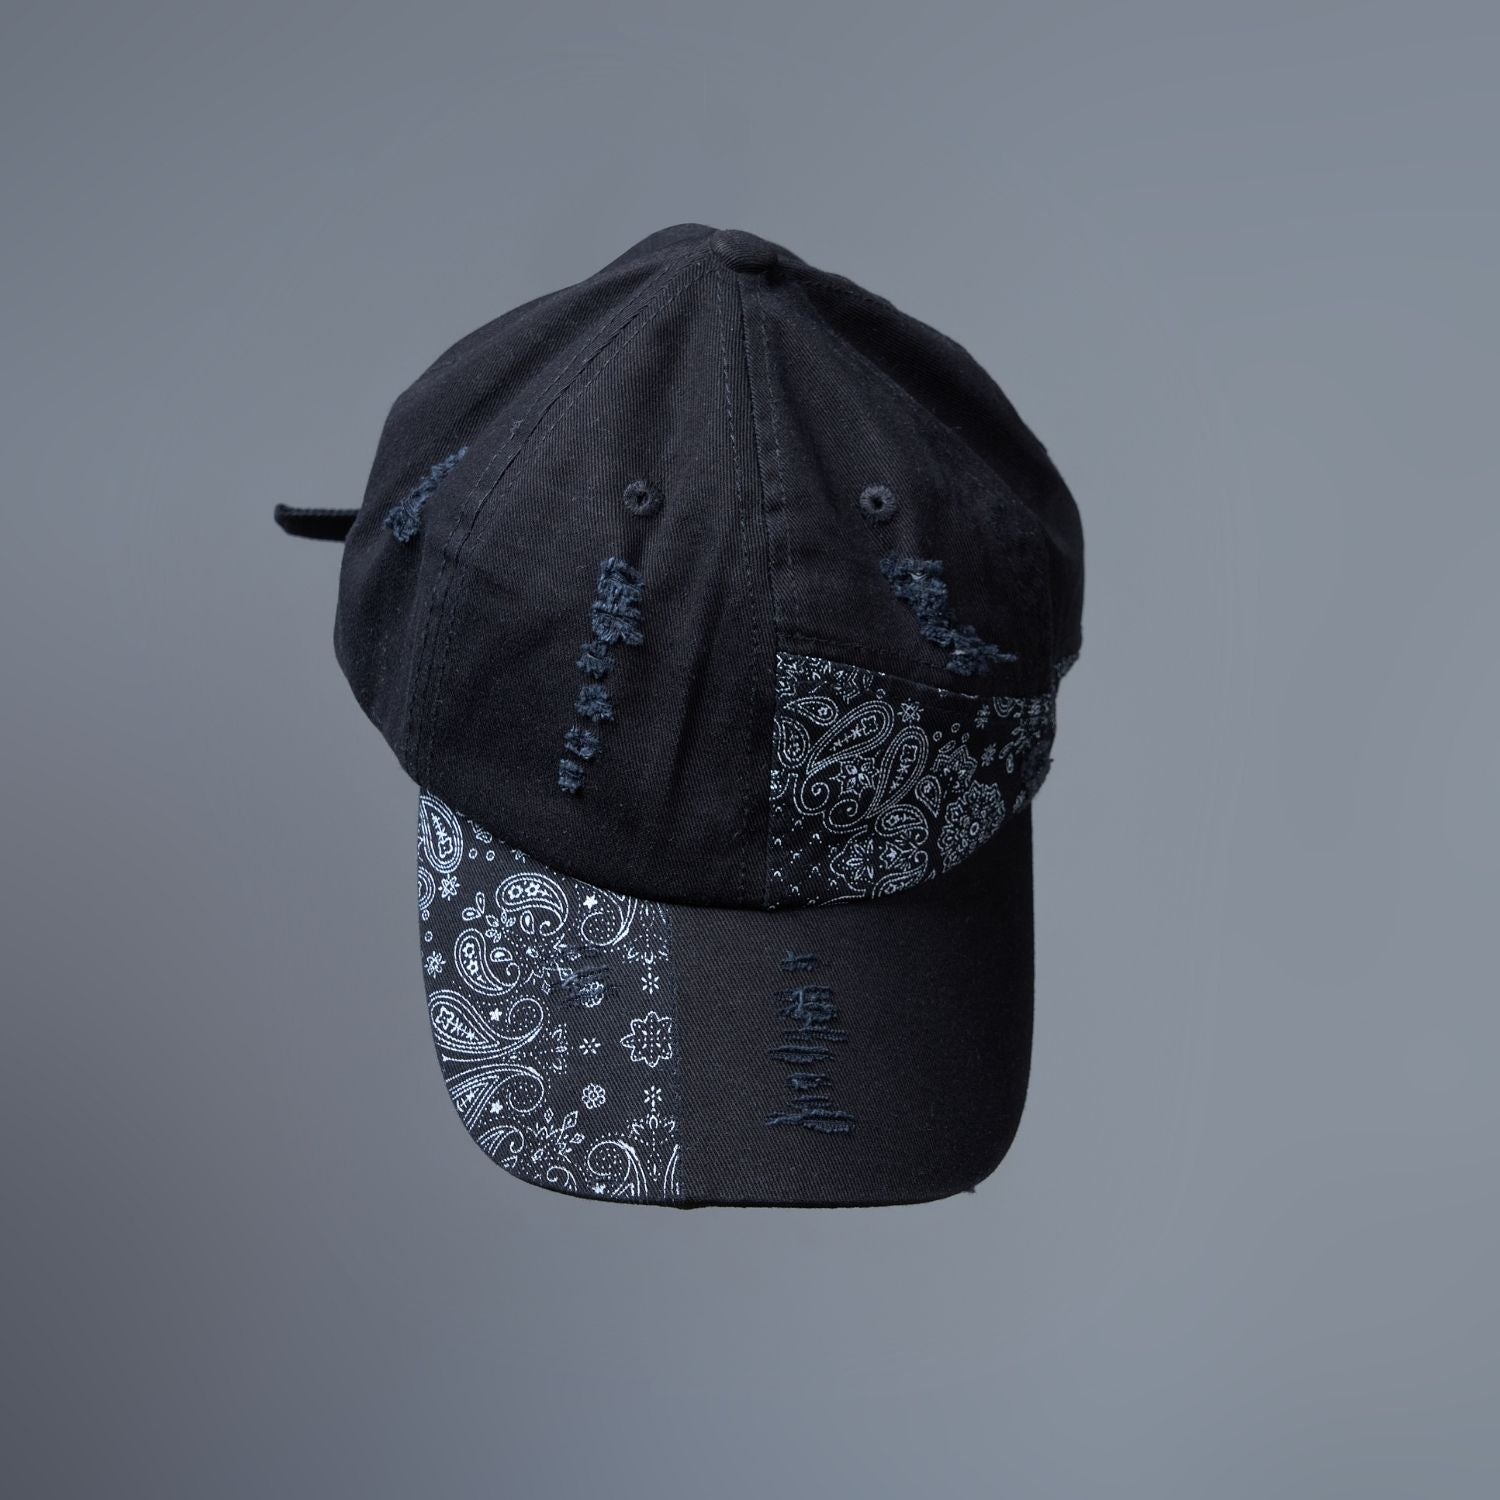 Black colored design patterned cap for men, Front view.